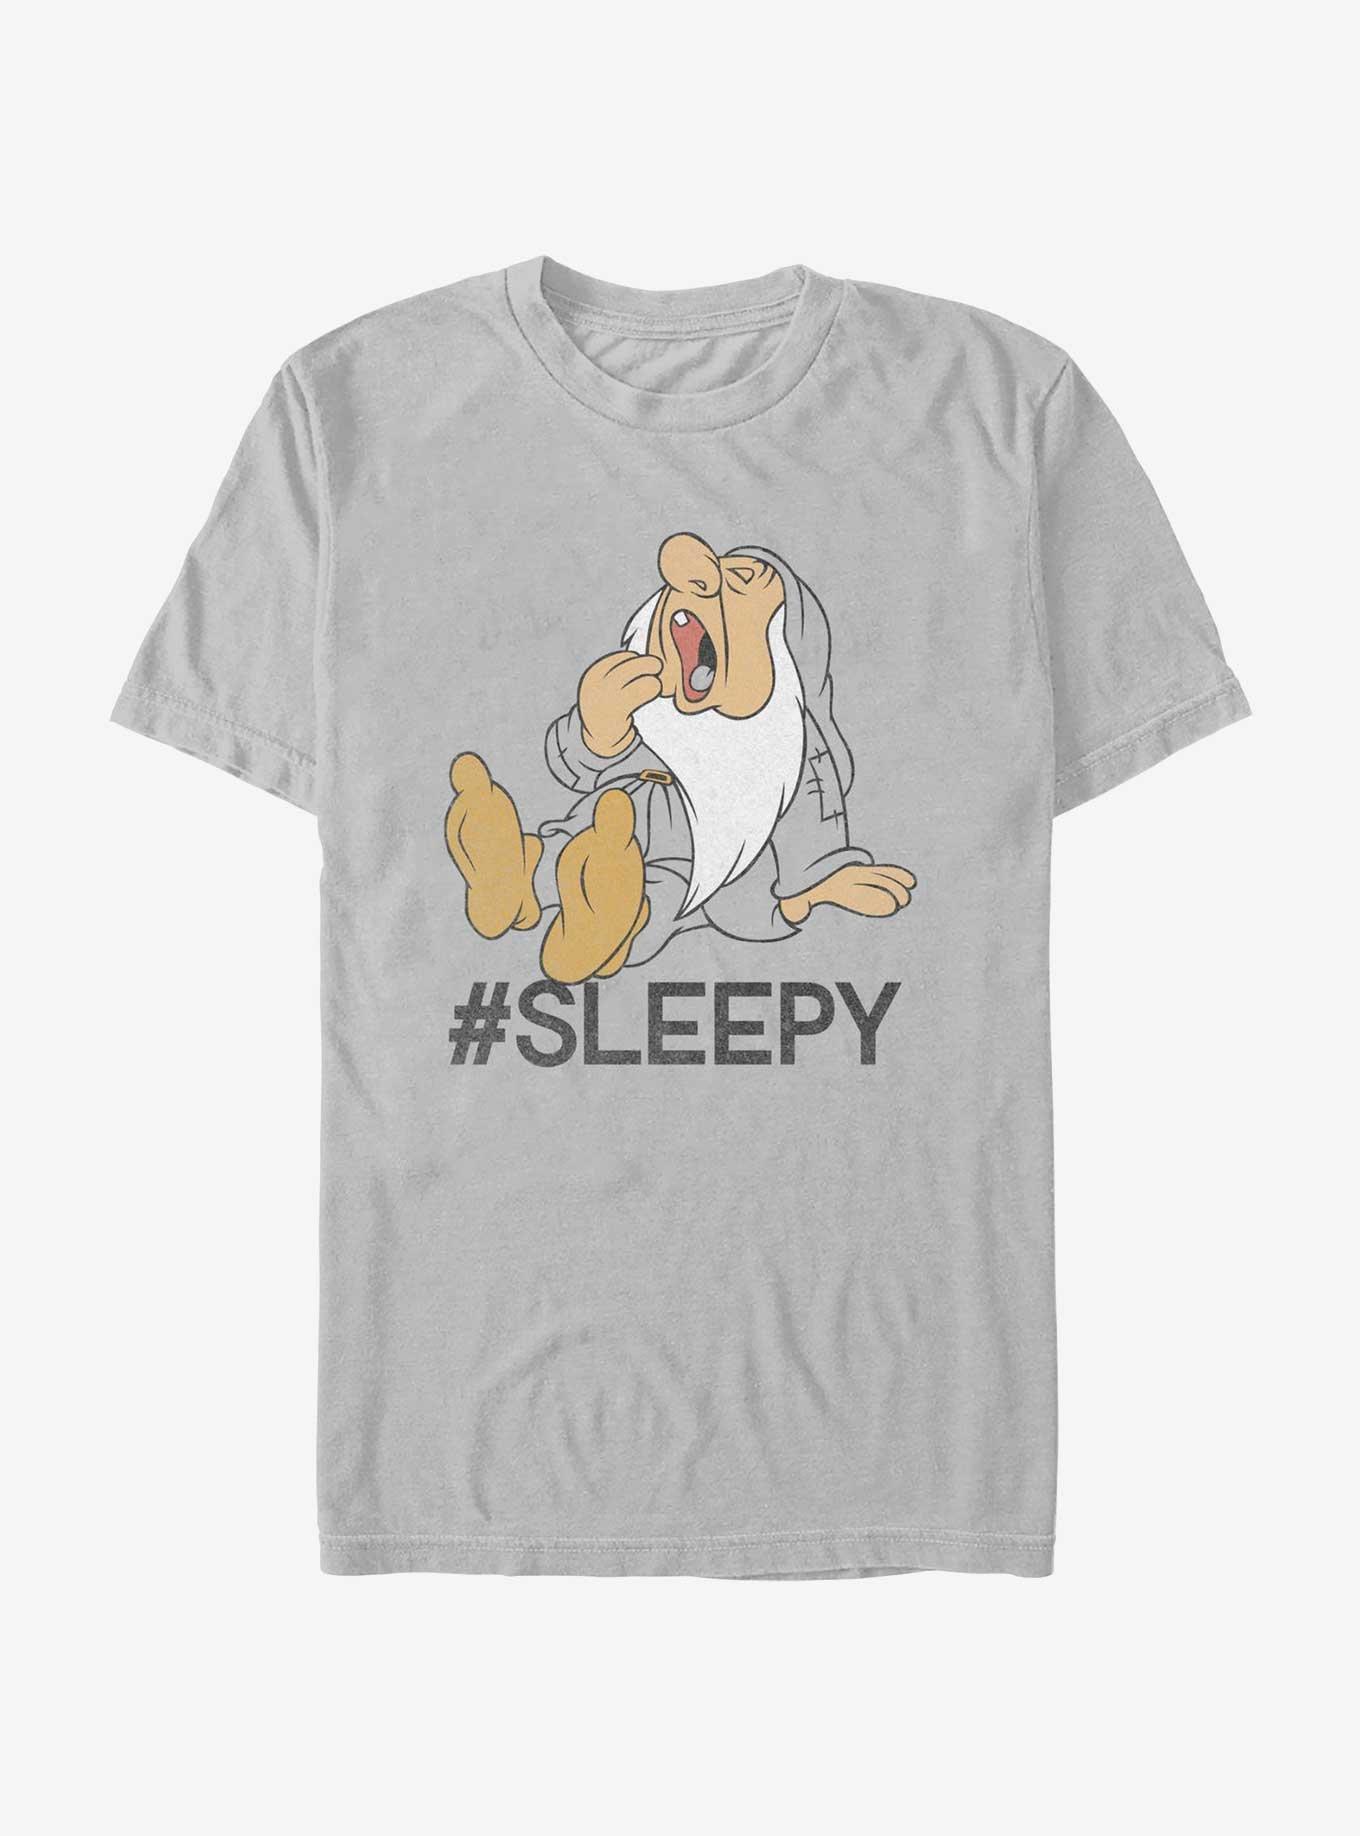 Disney Snow White and the Seven Dwarfs Hashtag Sleepy T-Shirt, SILVER, hi-res